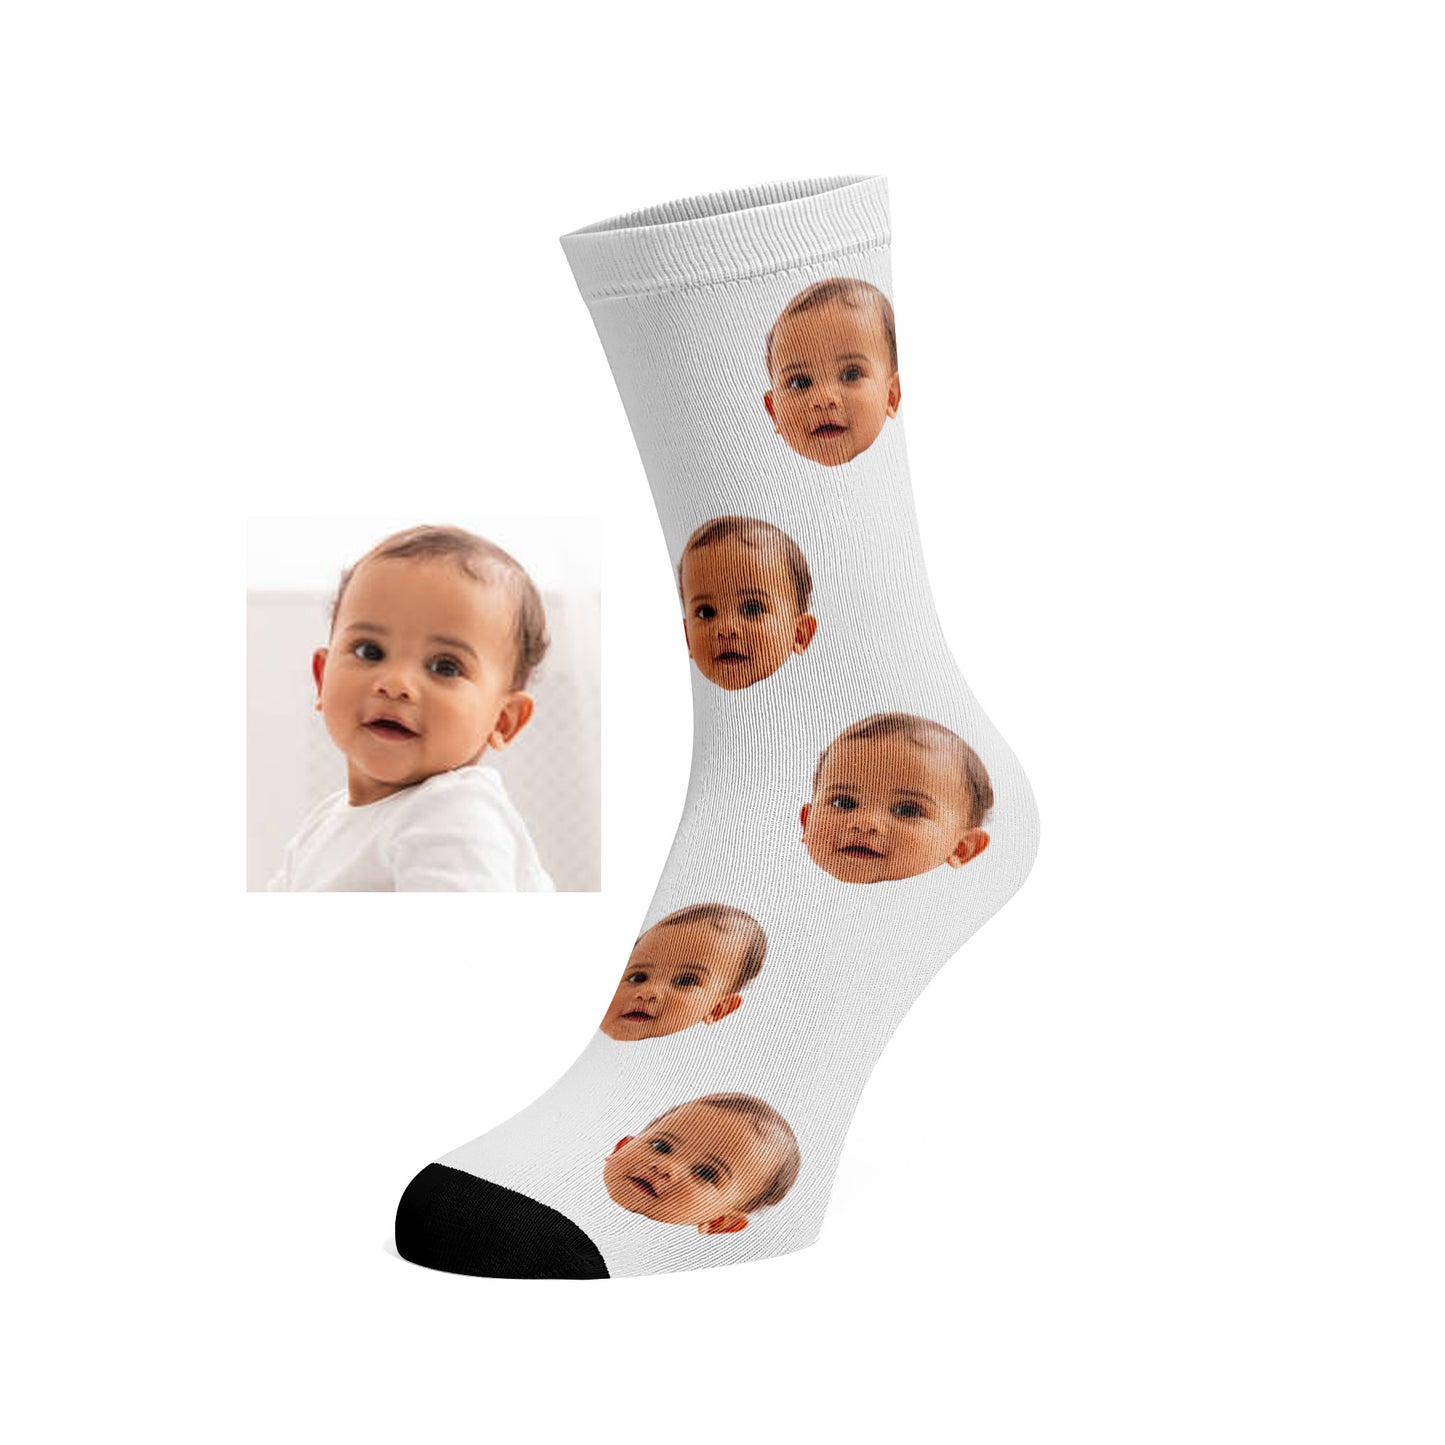 Custom Face socks